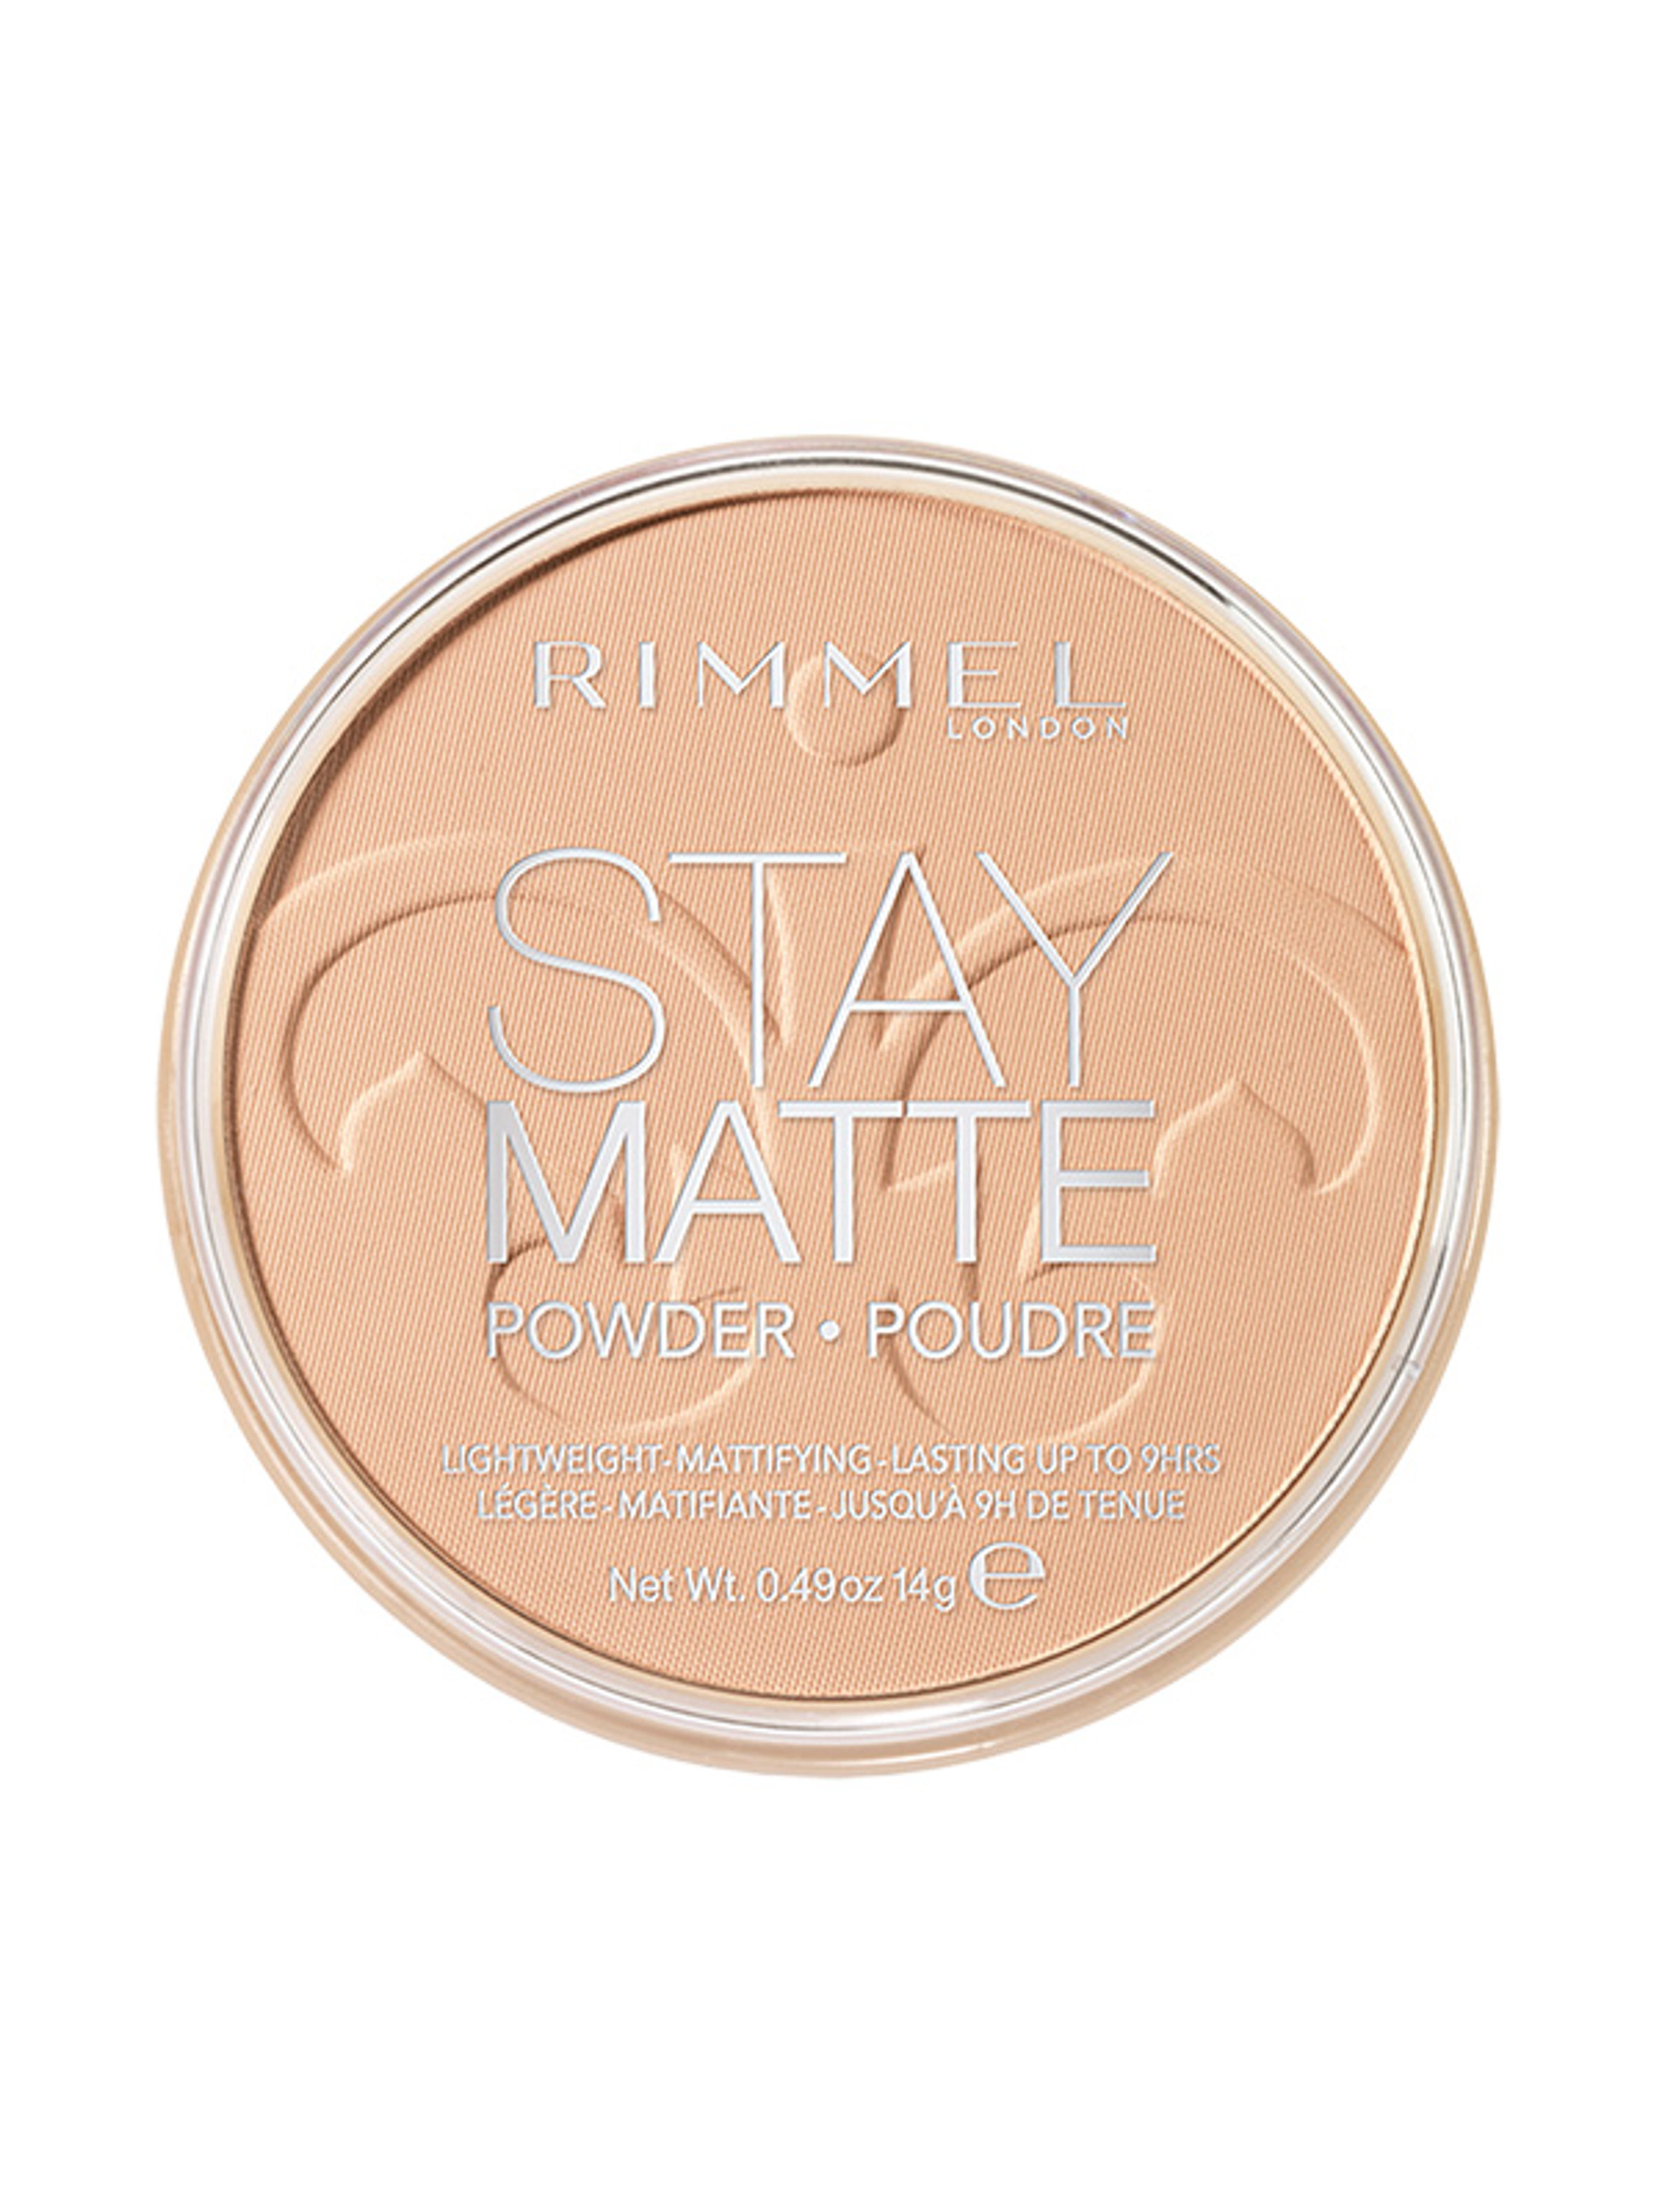 Rimmel Stay Matte púder 004 - 1 db-1